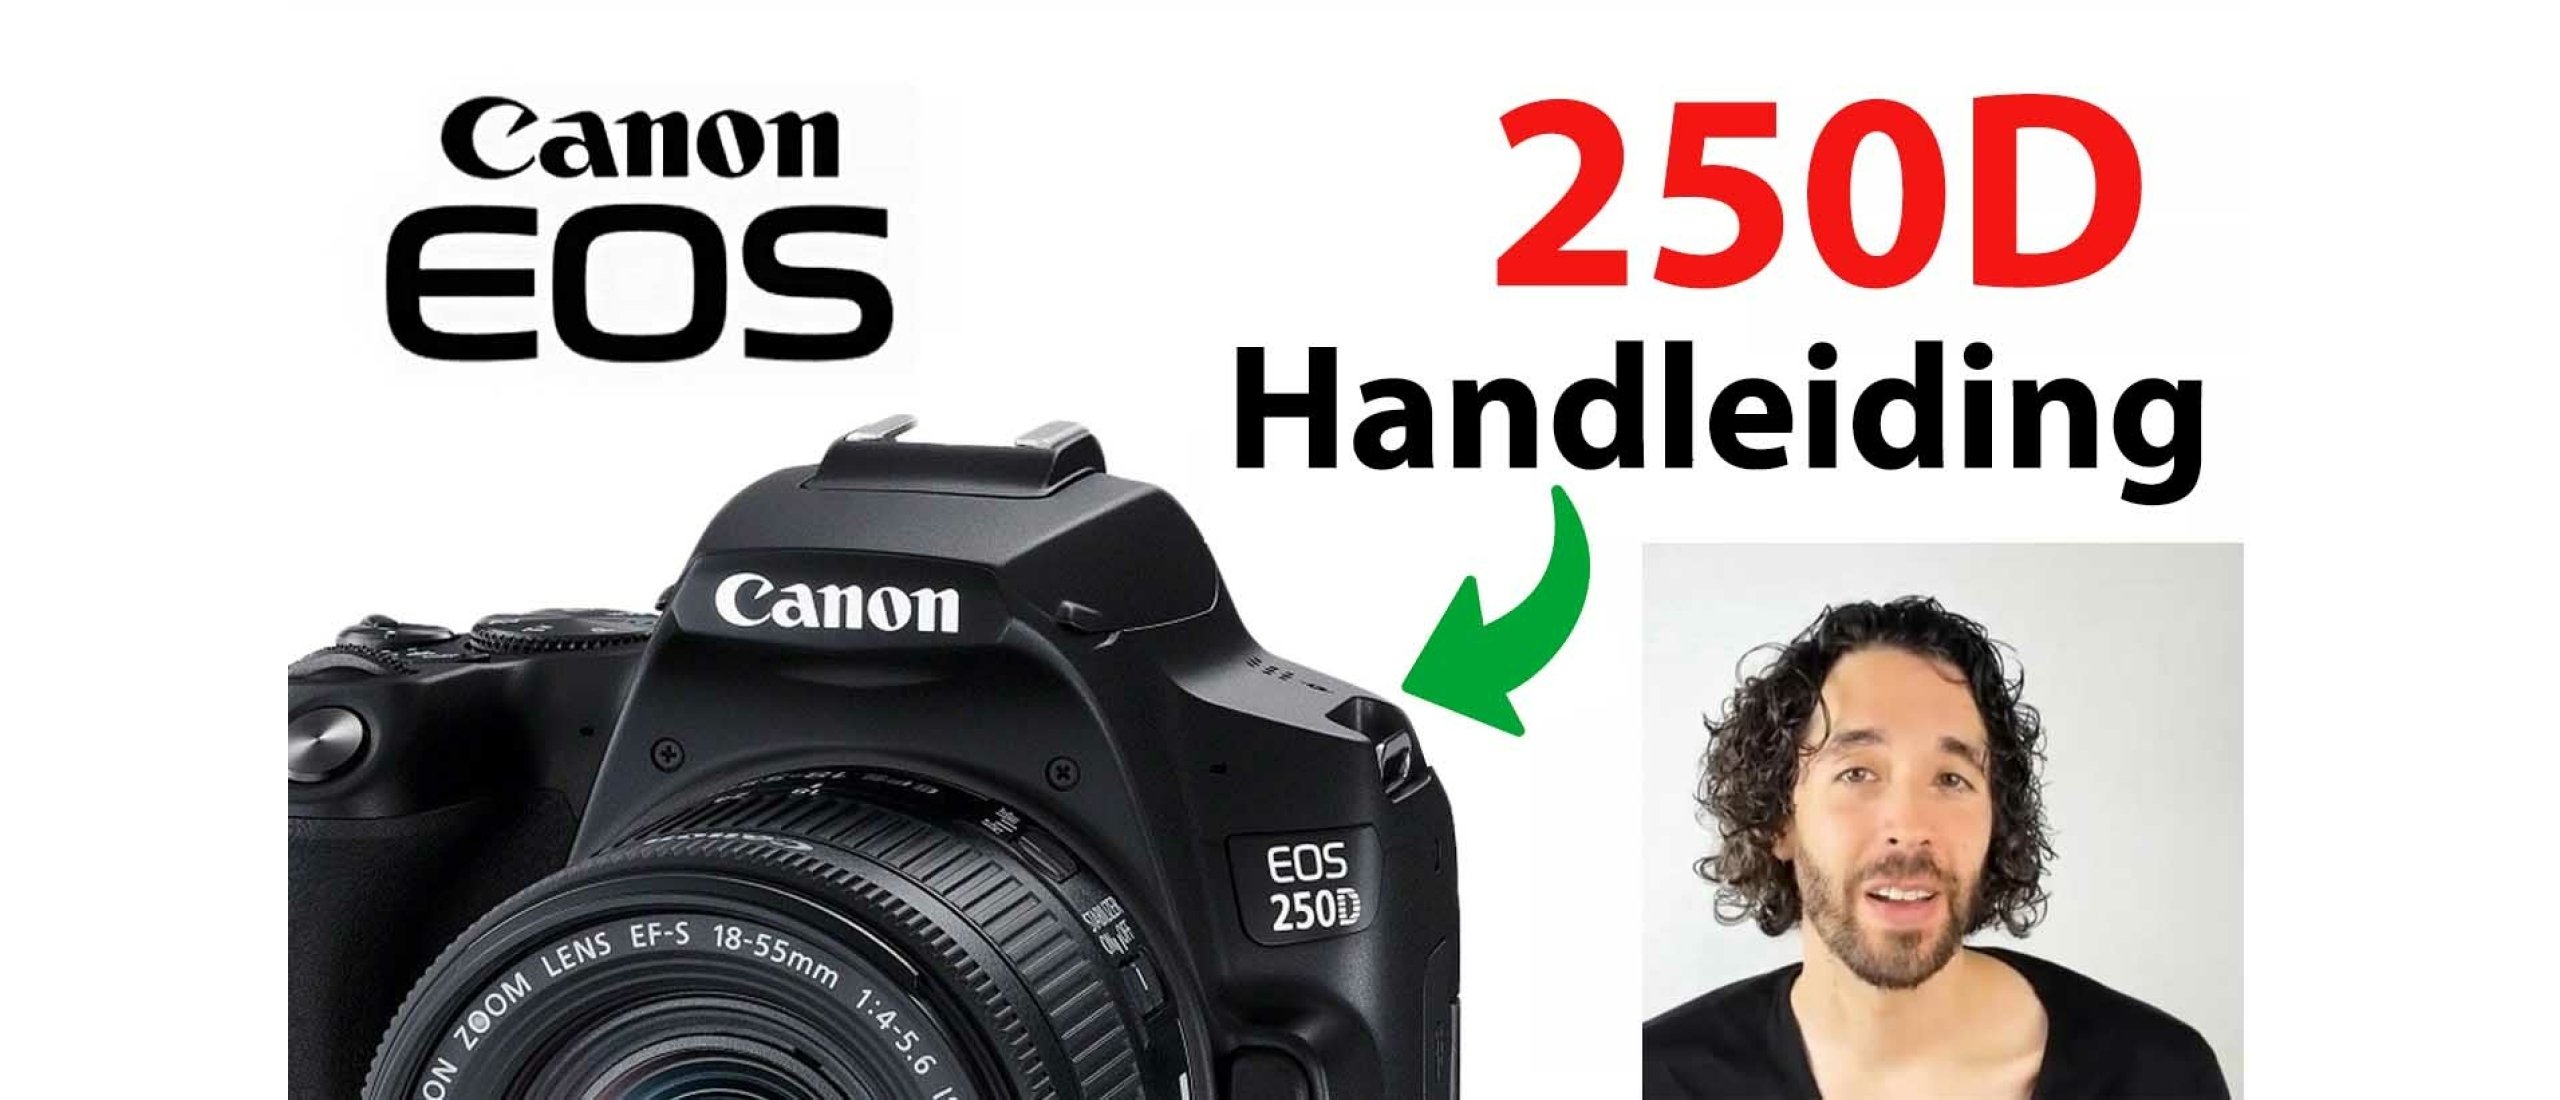 Canon EOS 250D Handleiding Video: Instellingen, menu, knoppen uitleg